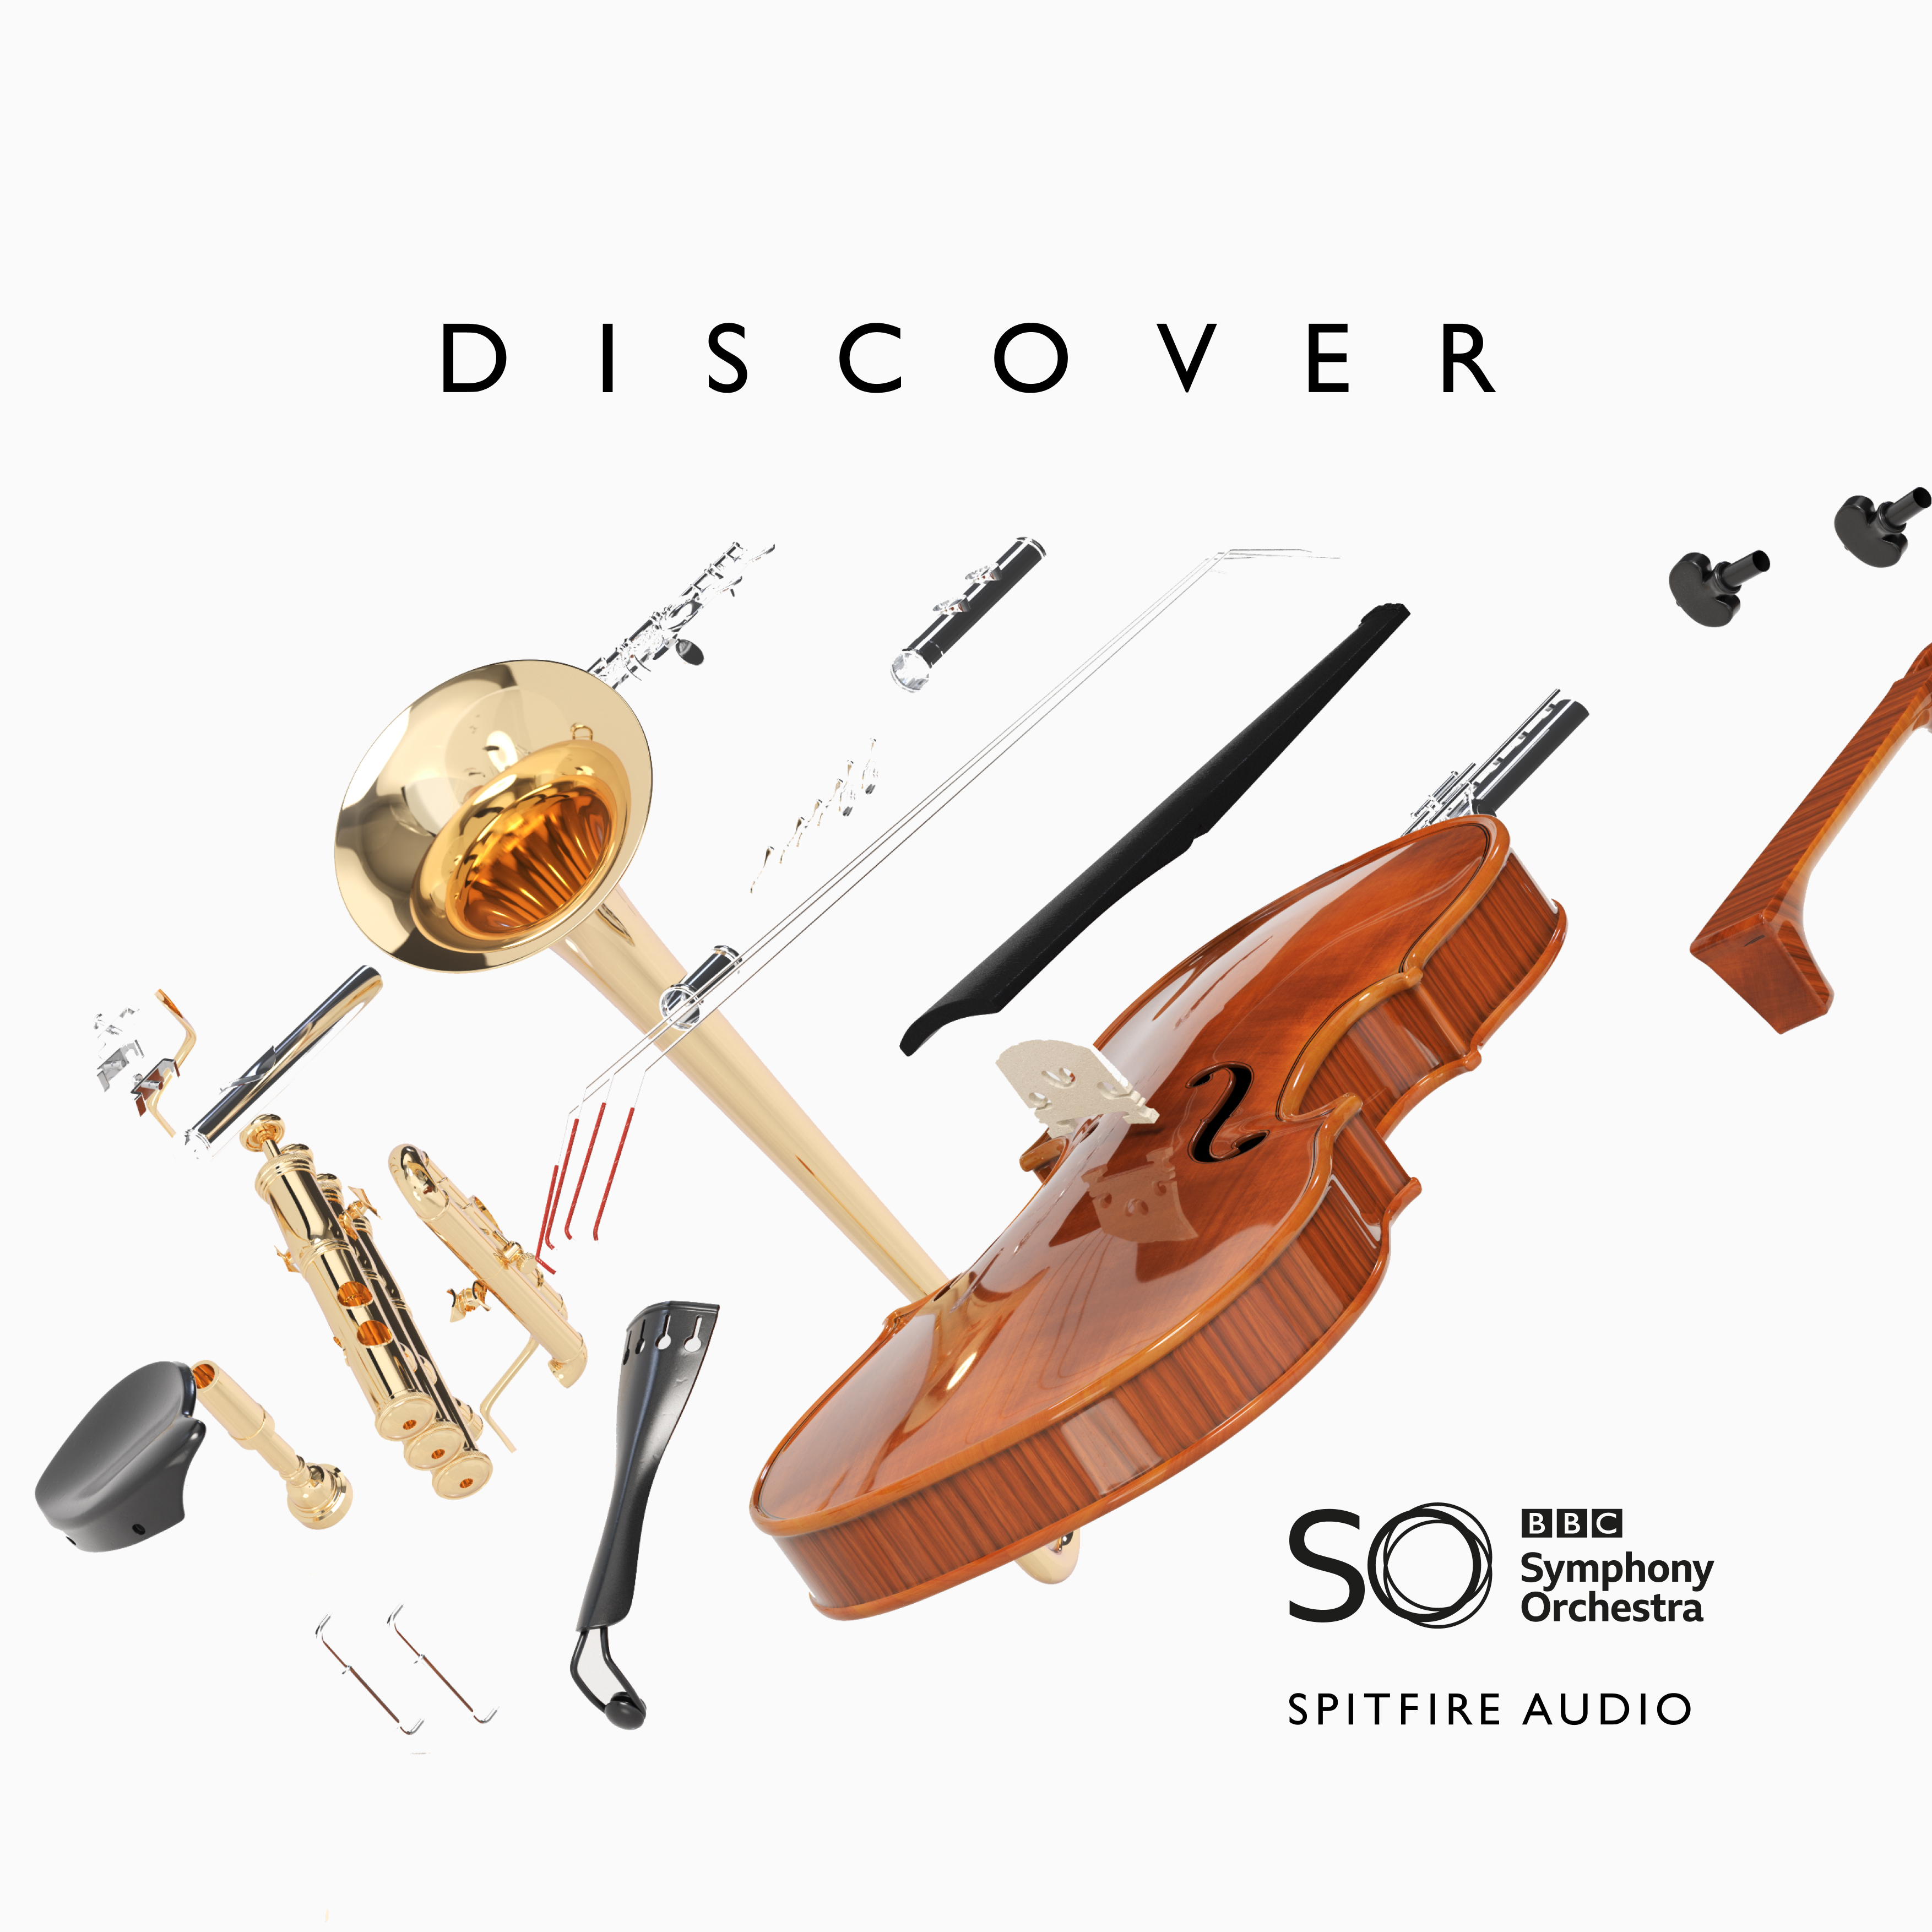 BBC Symphony Orchestra Core — Spitfire Audio